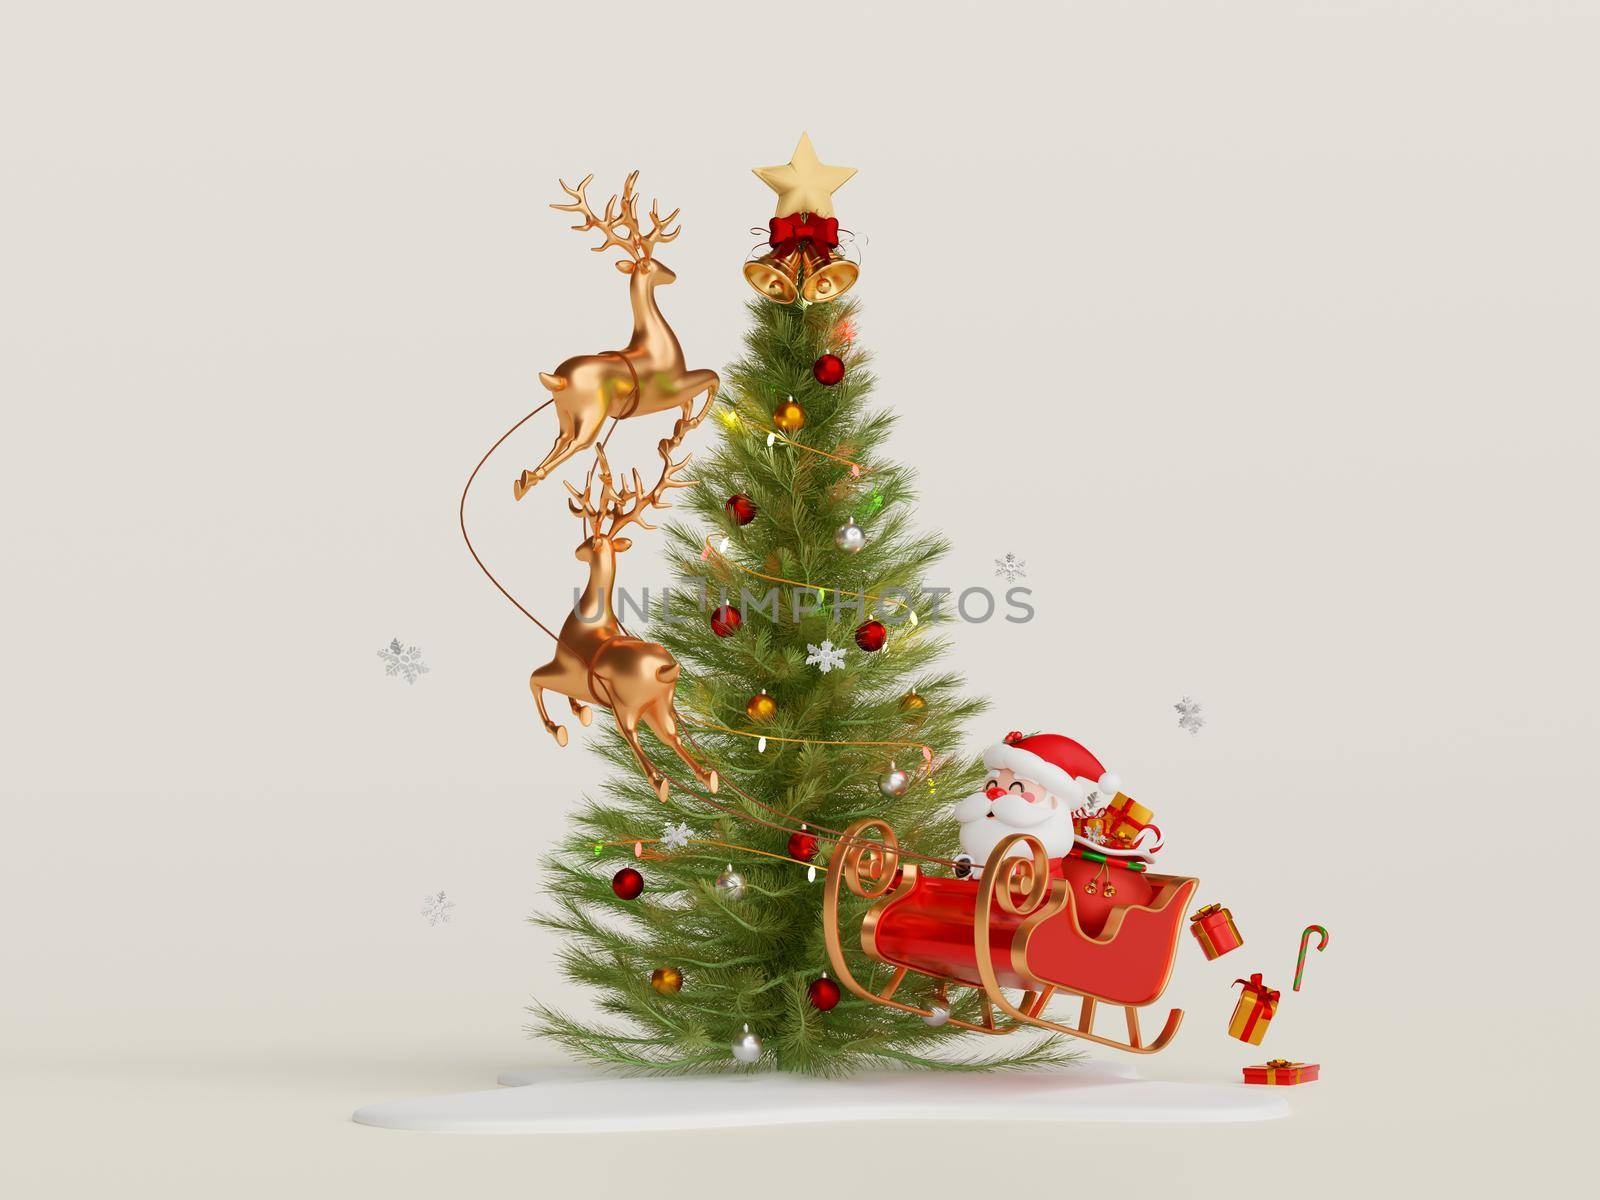 3d illustration of Santa Claus riding on sleigh around Christmas tree by nutzchotwarut